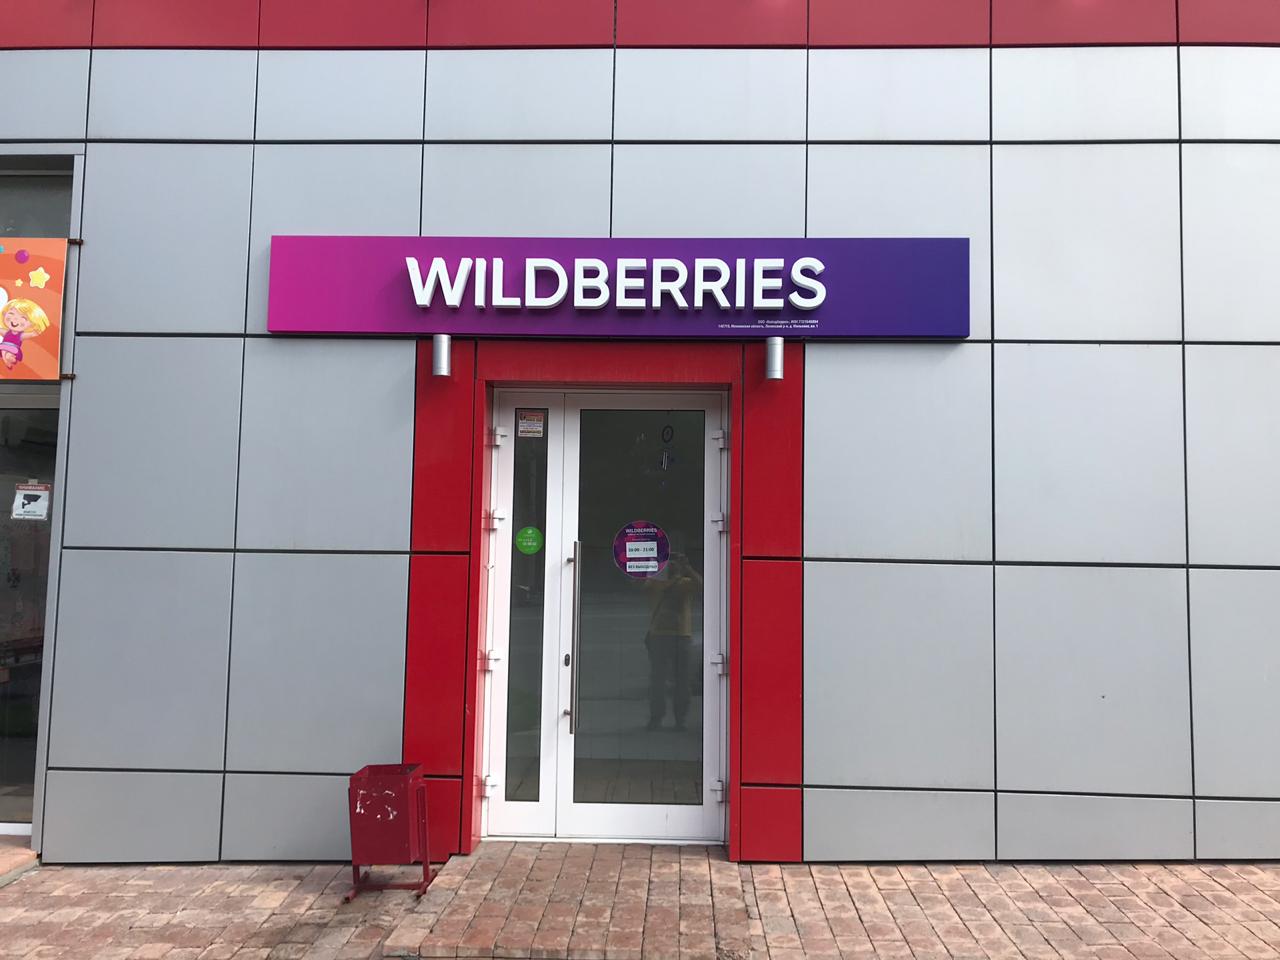 Вб валдберис. Wildberries вывеска. Вывеска ПВЗ Wildberries. Wildberries вывеска на здании. Вывеска Wildberries новая.